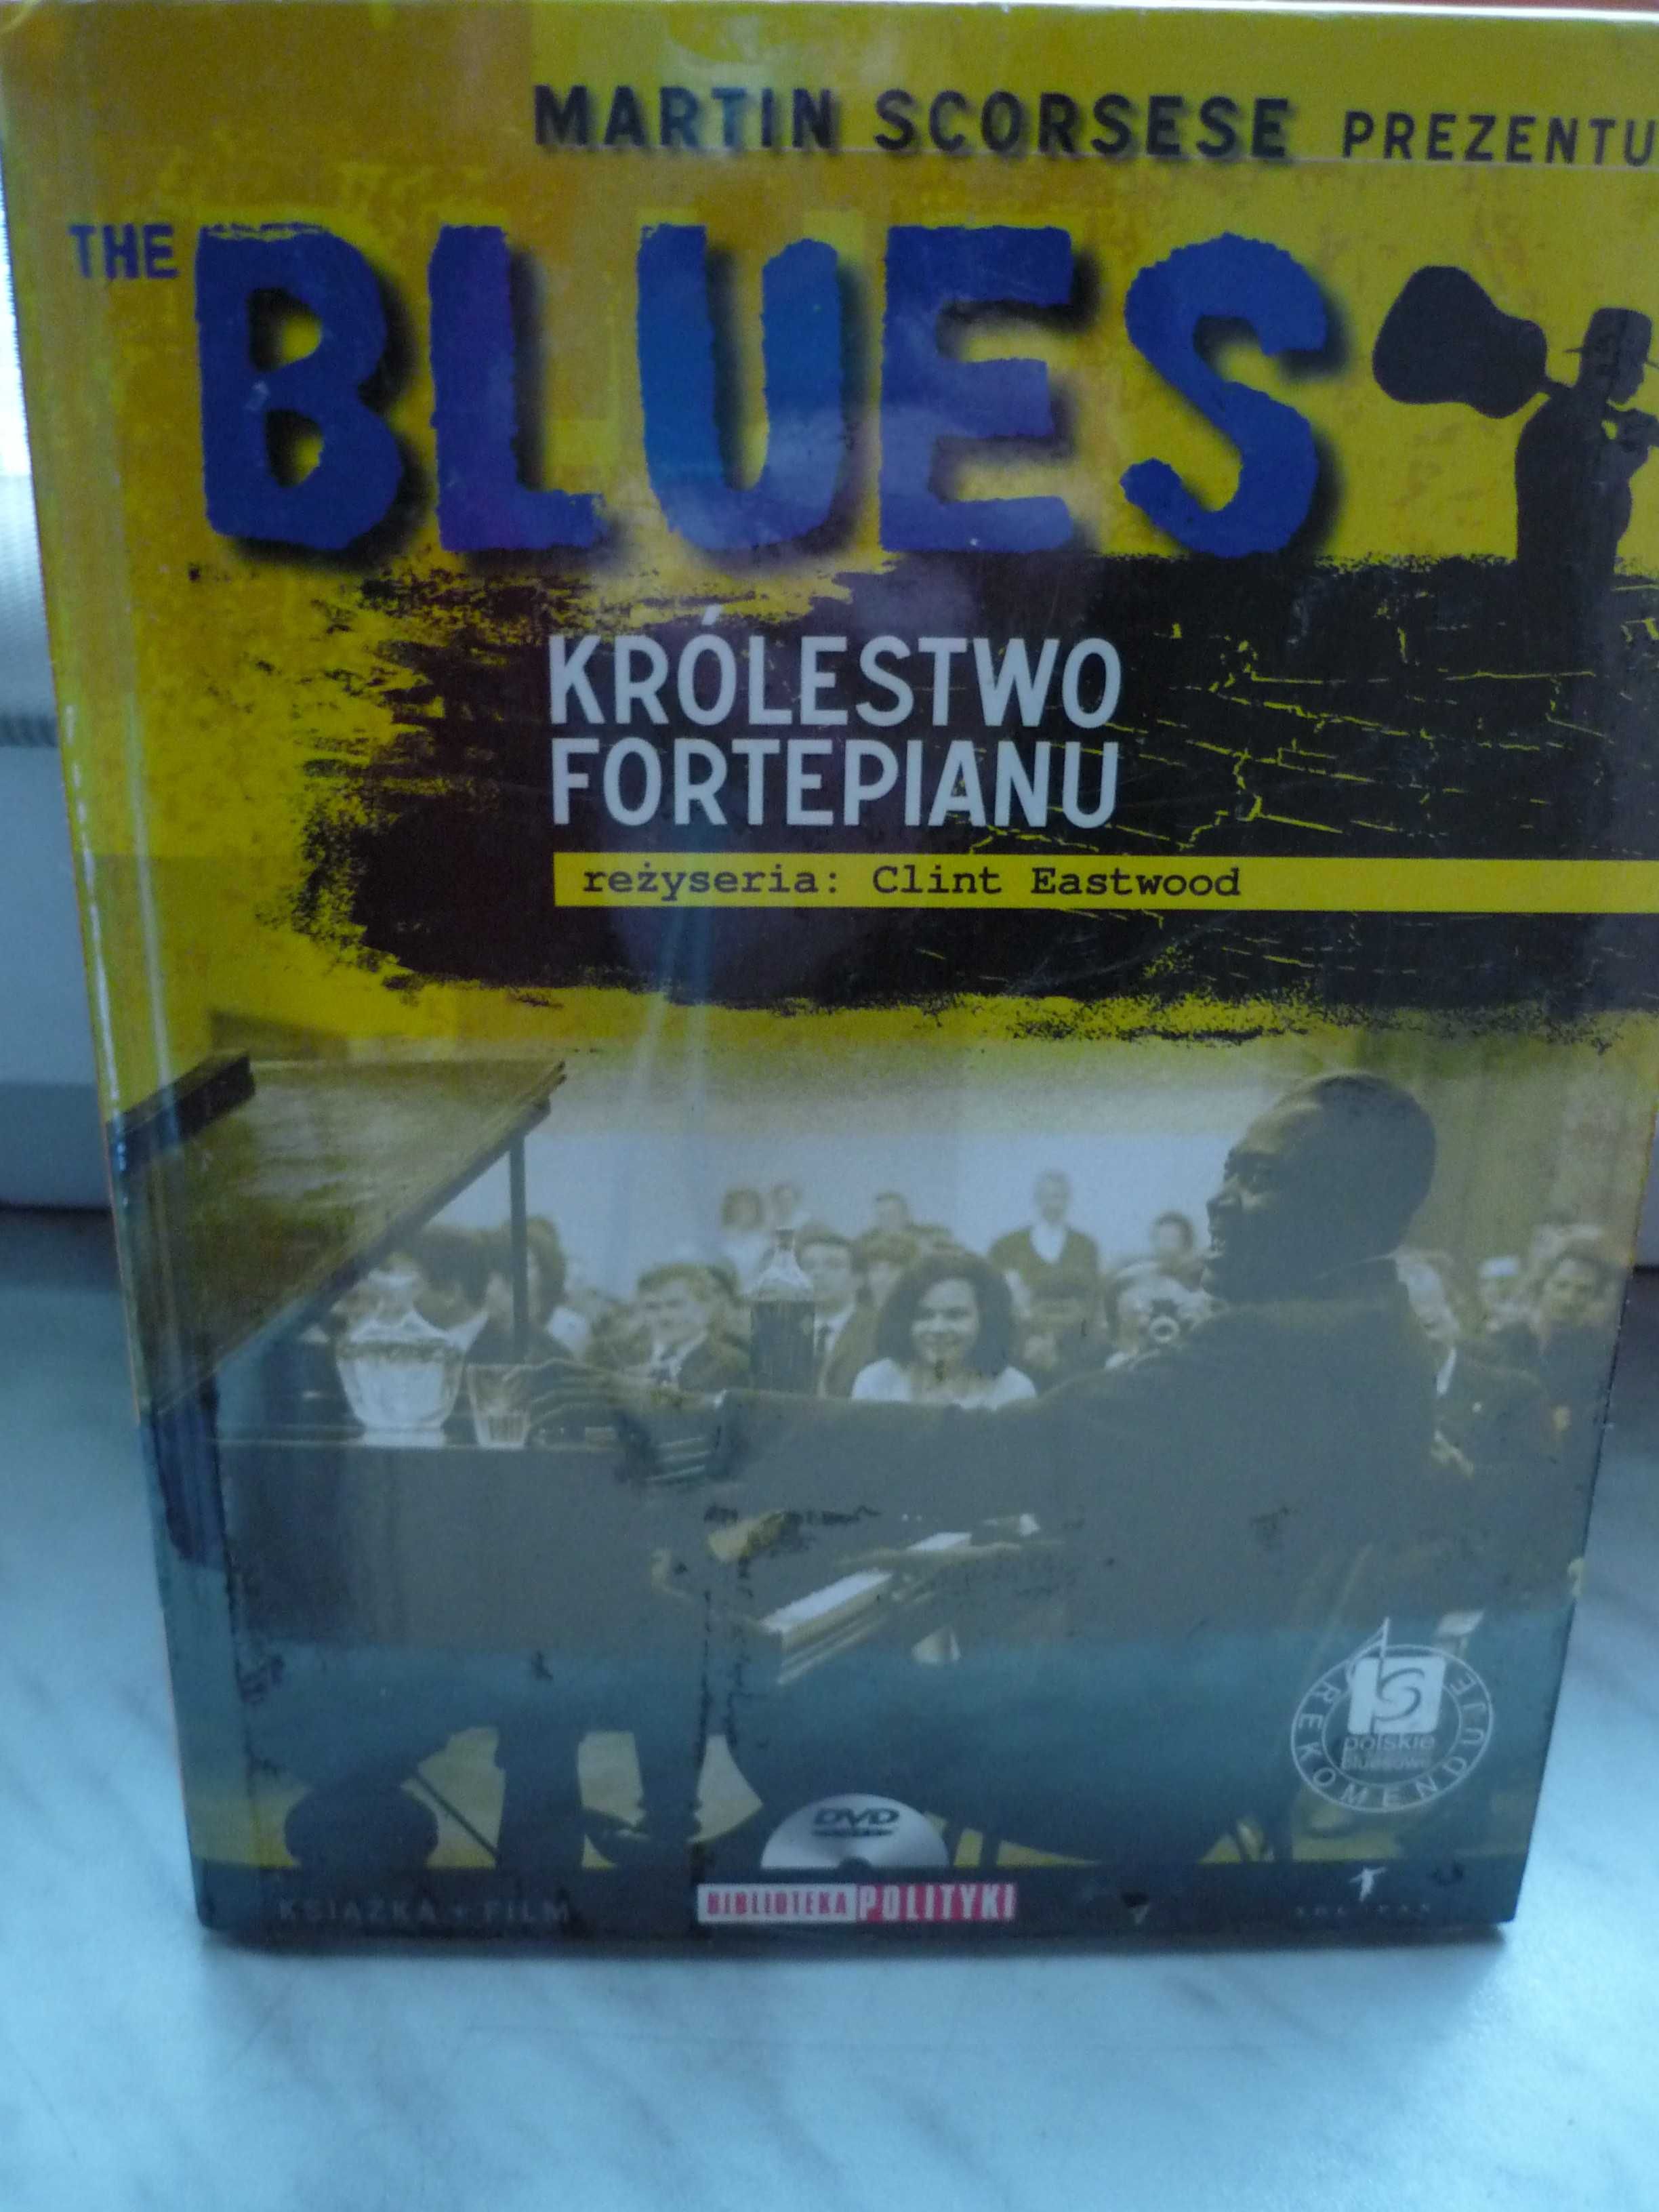 Blues , Królestwo fortepianu , DVD.